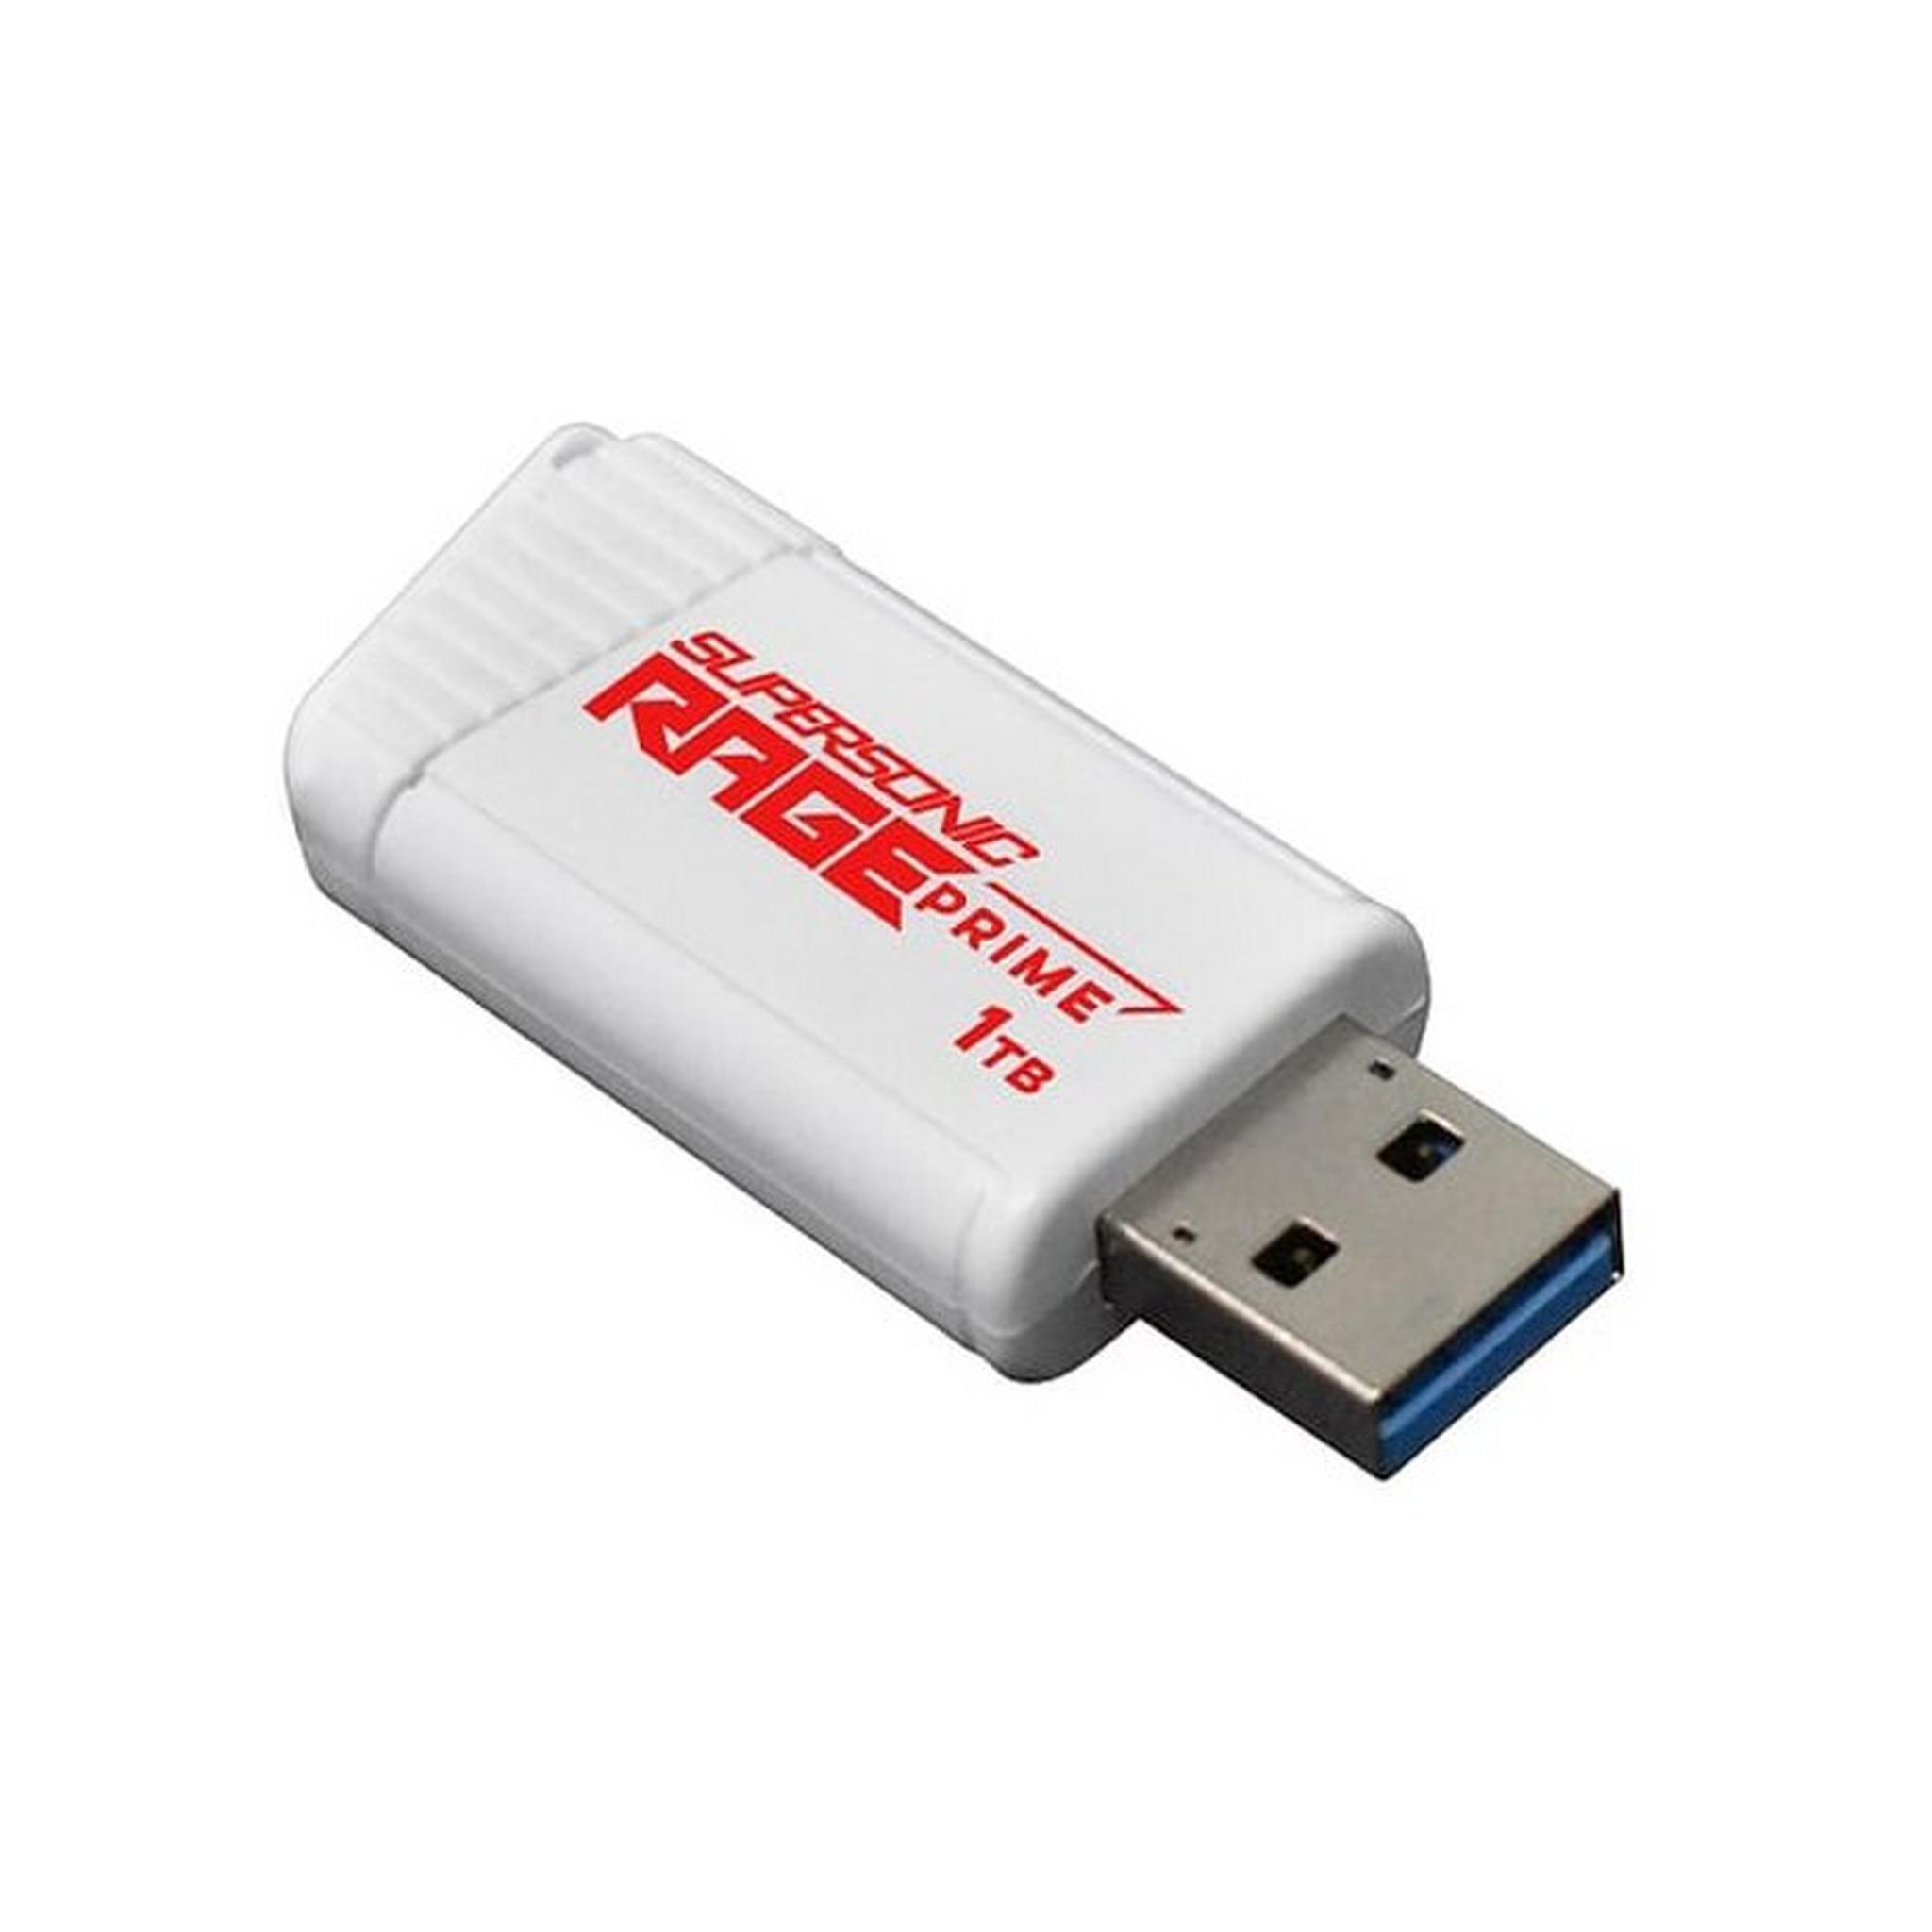 Patriot 1TB Supersonic Rage Prime USB 3.2 Gen 2 Type-A Flash Drive, PEF1TBRPMW32U